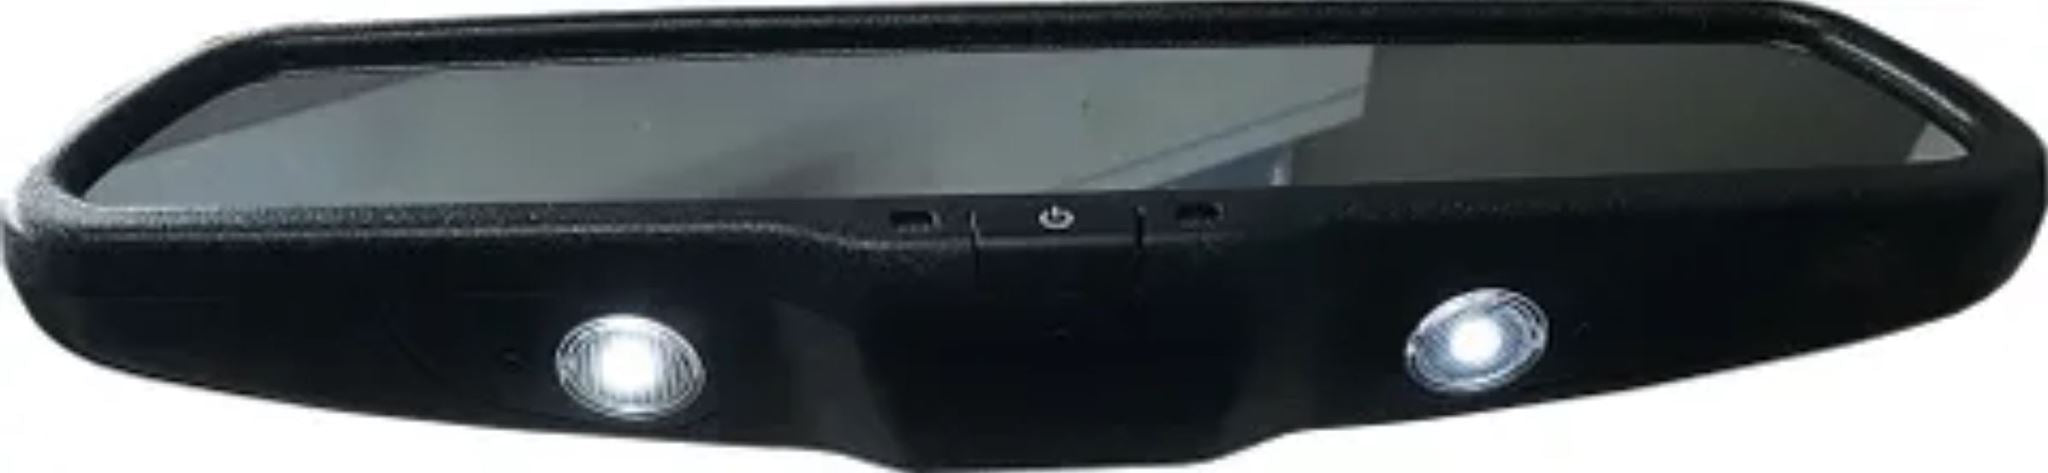 Mongoose 4.3 PEDESTAL monitor rear view mirror